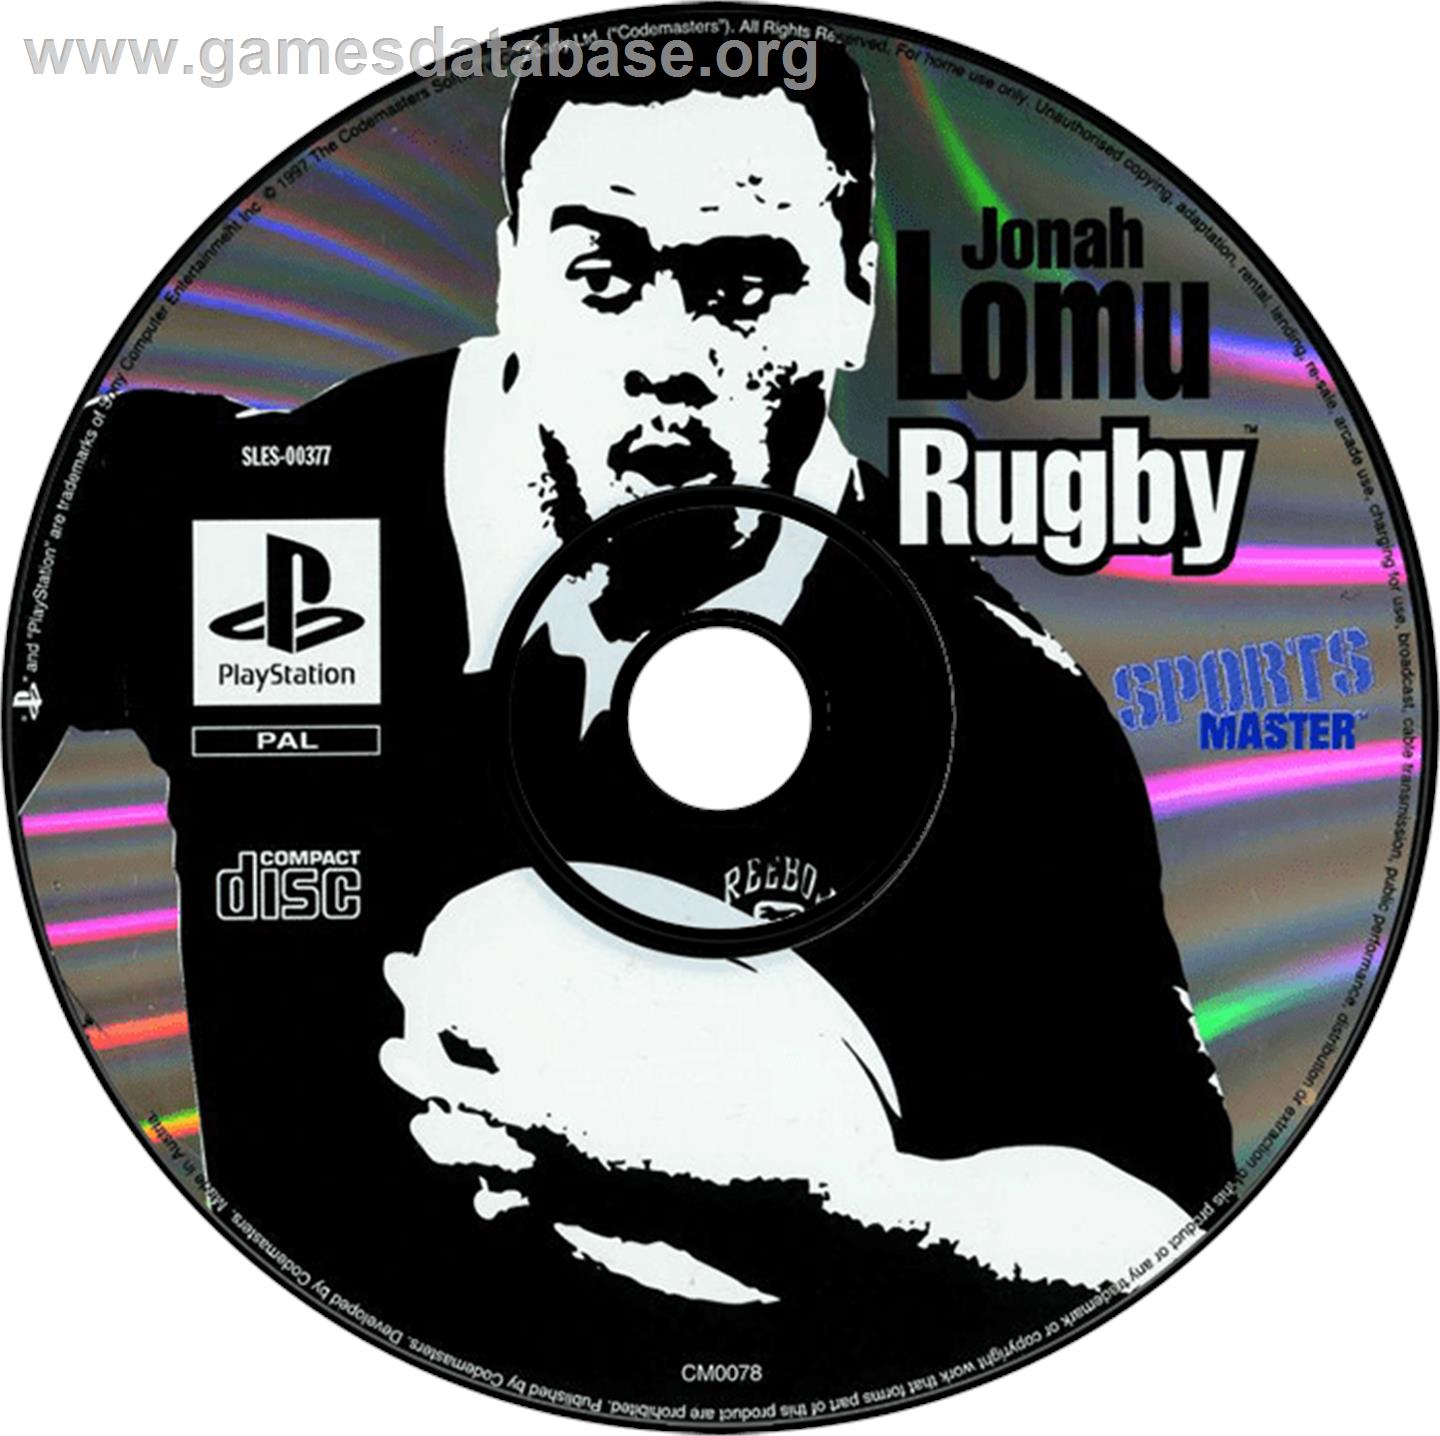 Jonah Lomu Rugby / Brian Lara Cricket - Sony Playstation - Artwork - Disc